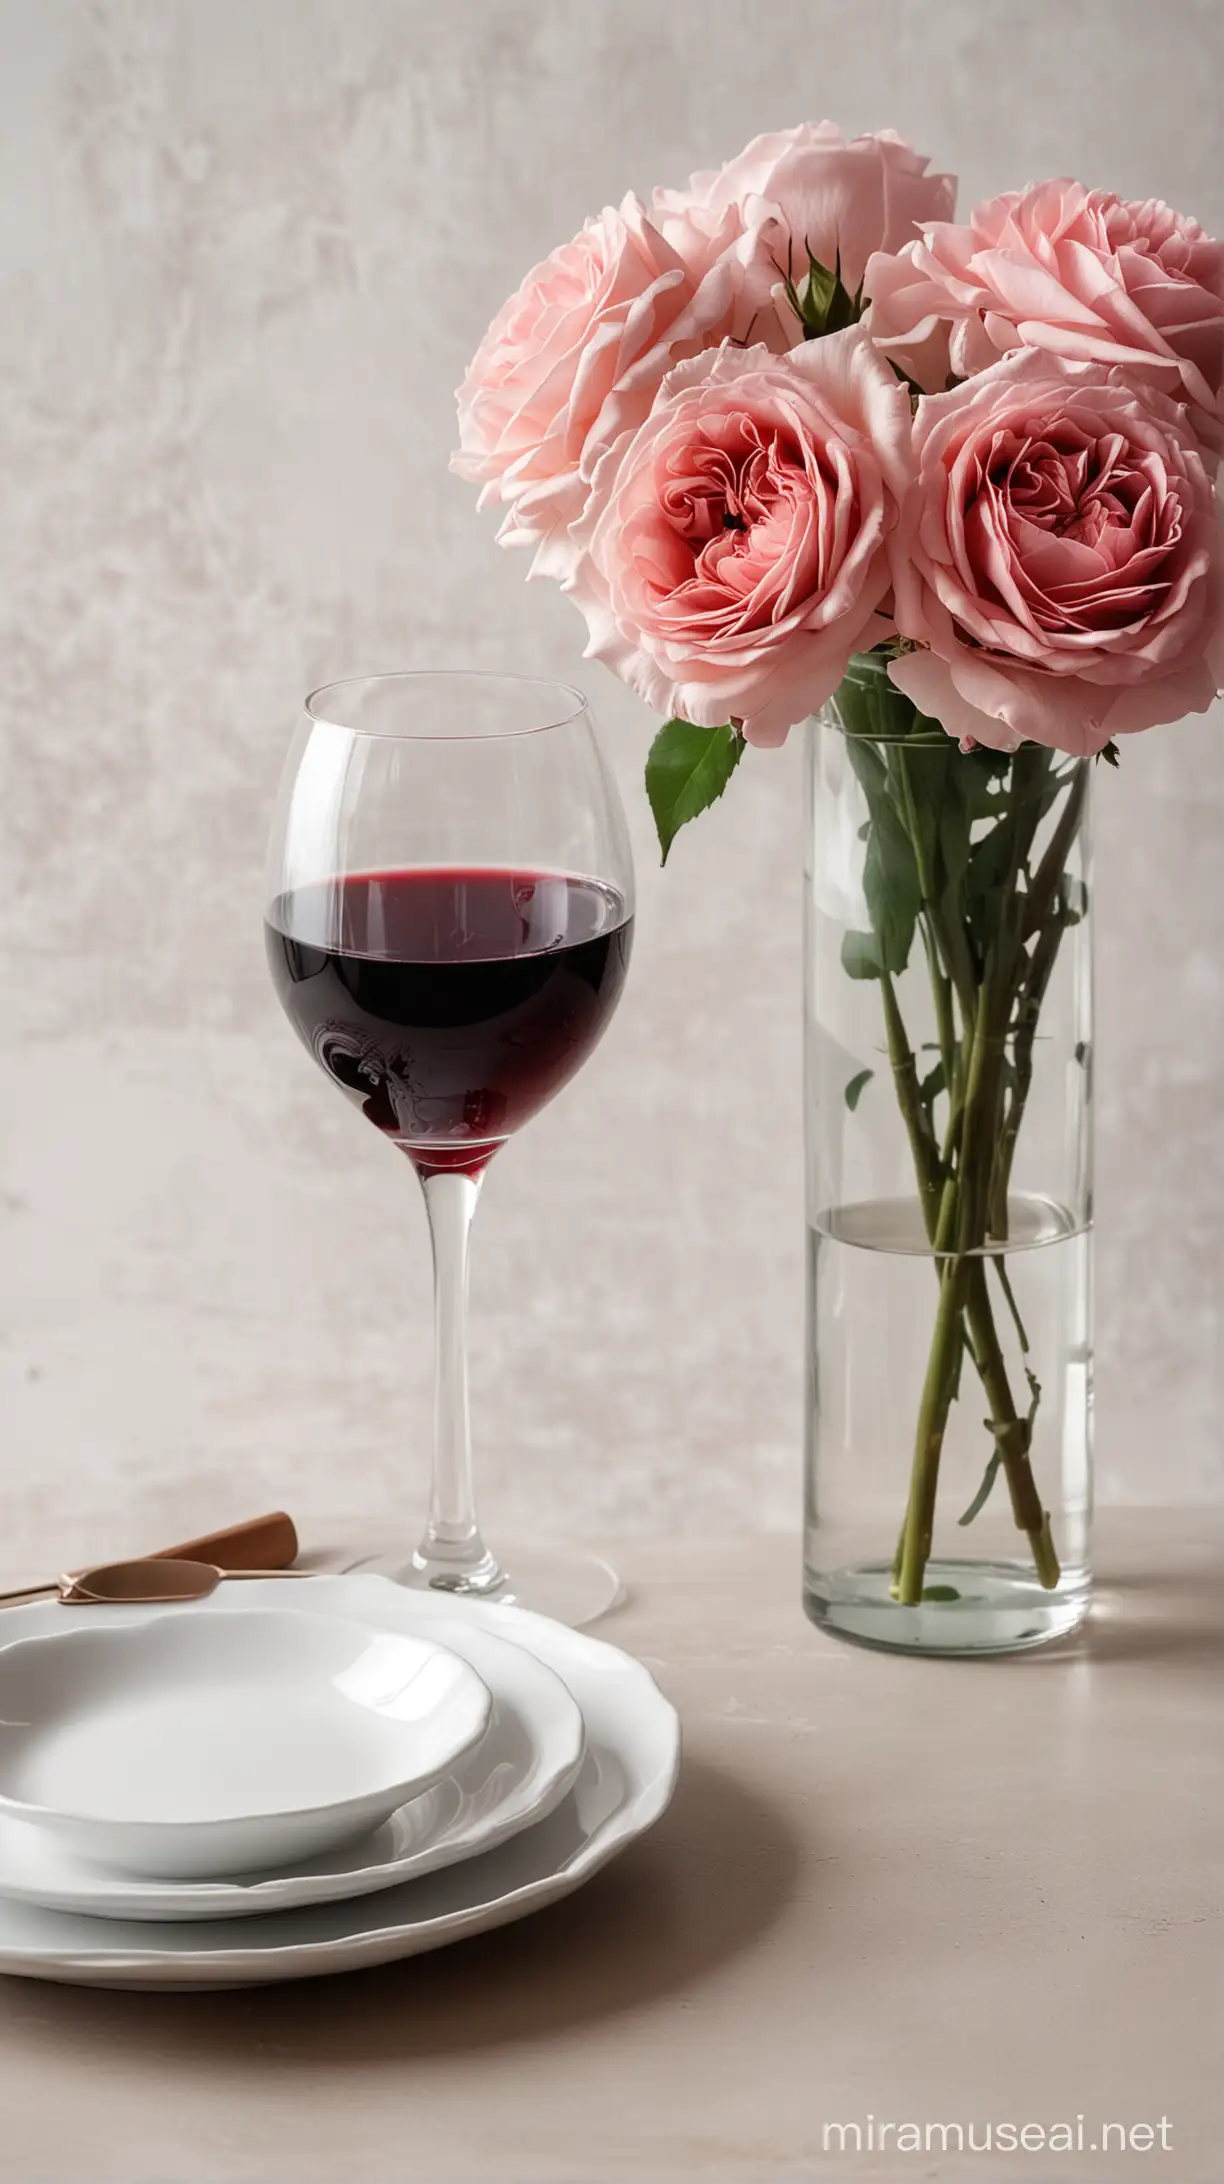 Elegant Wine and Roses Setting with Minimalist Style